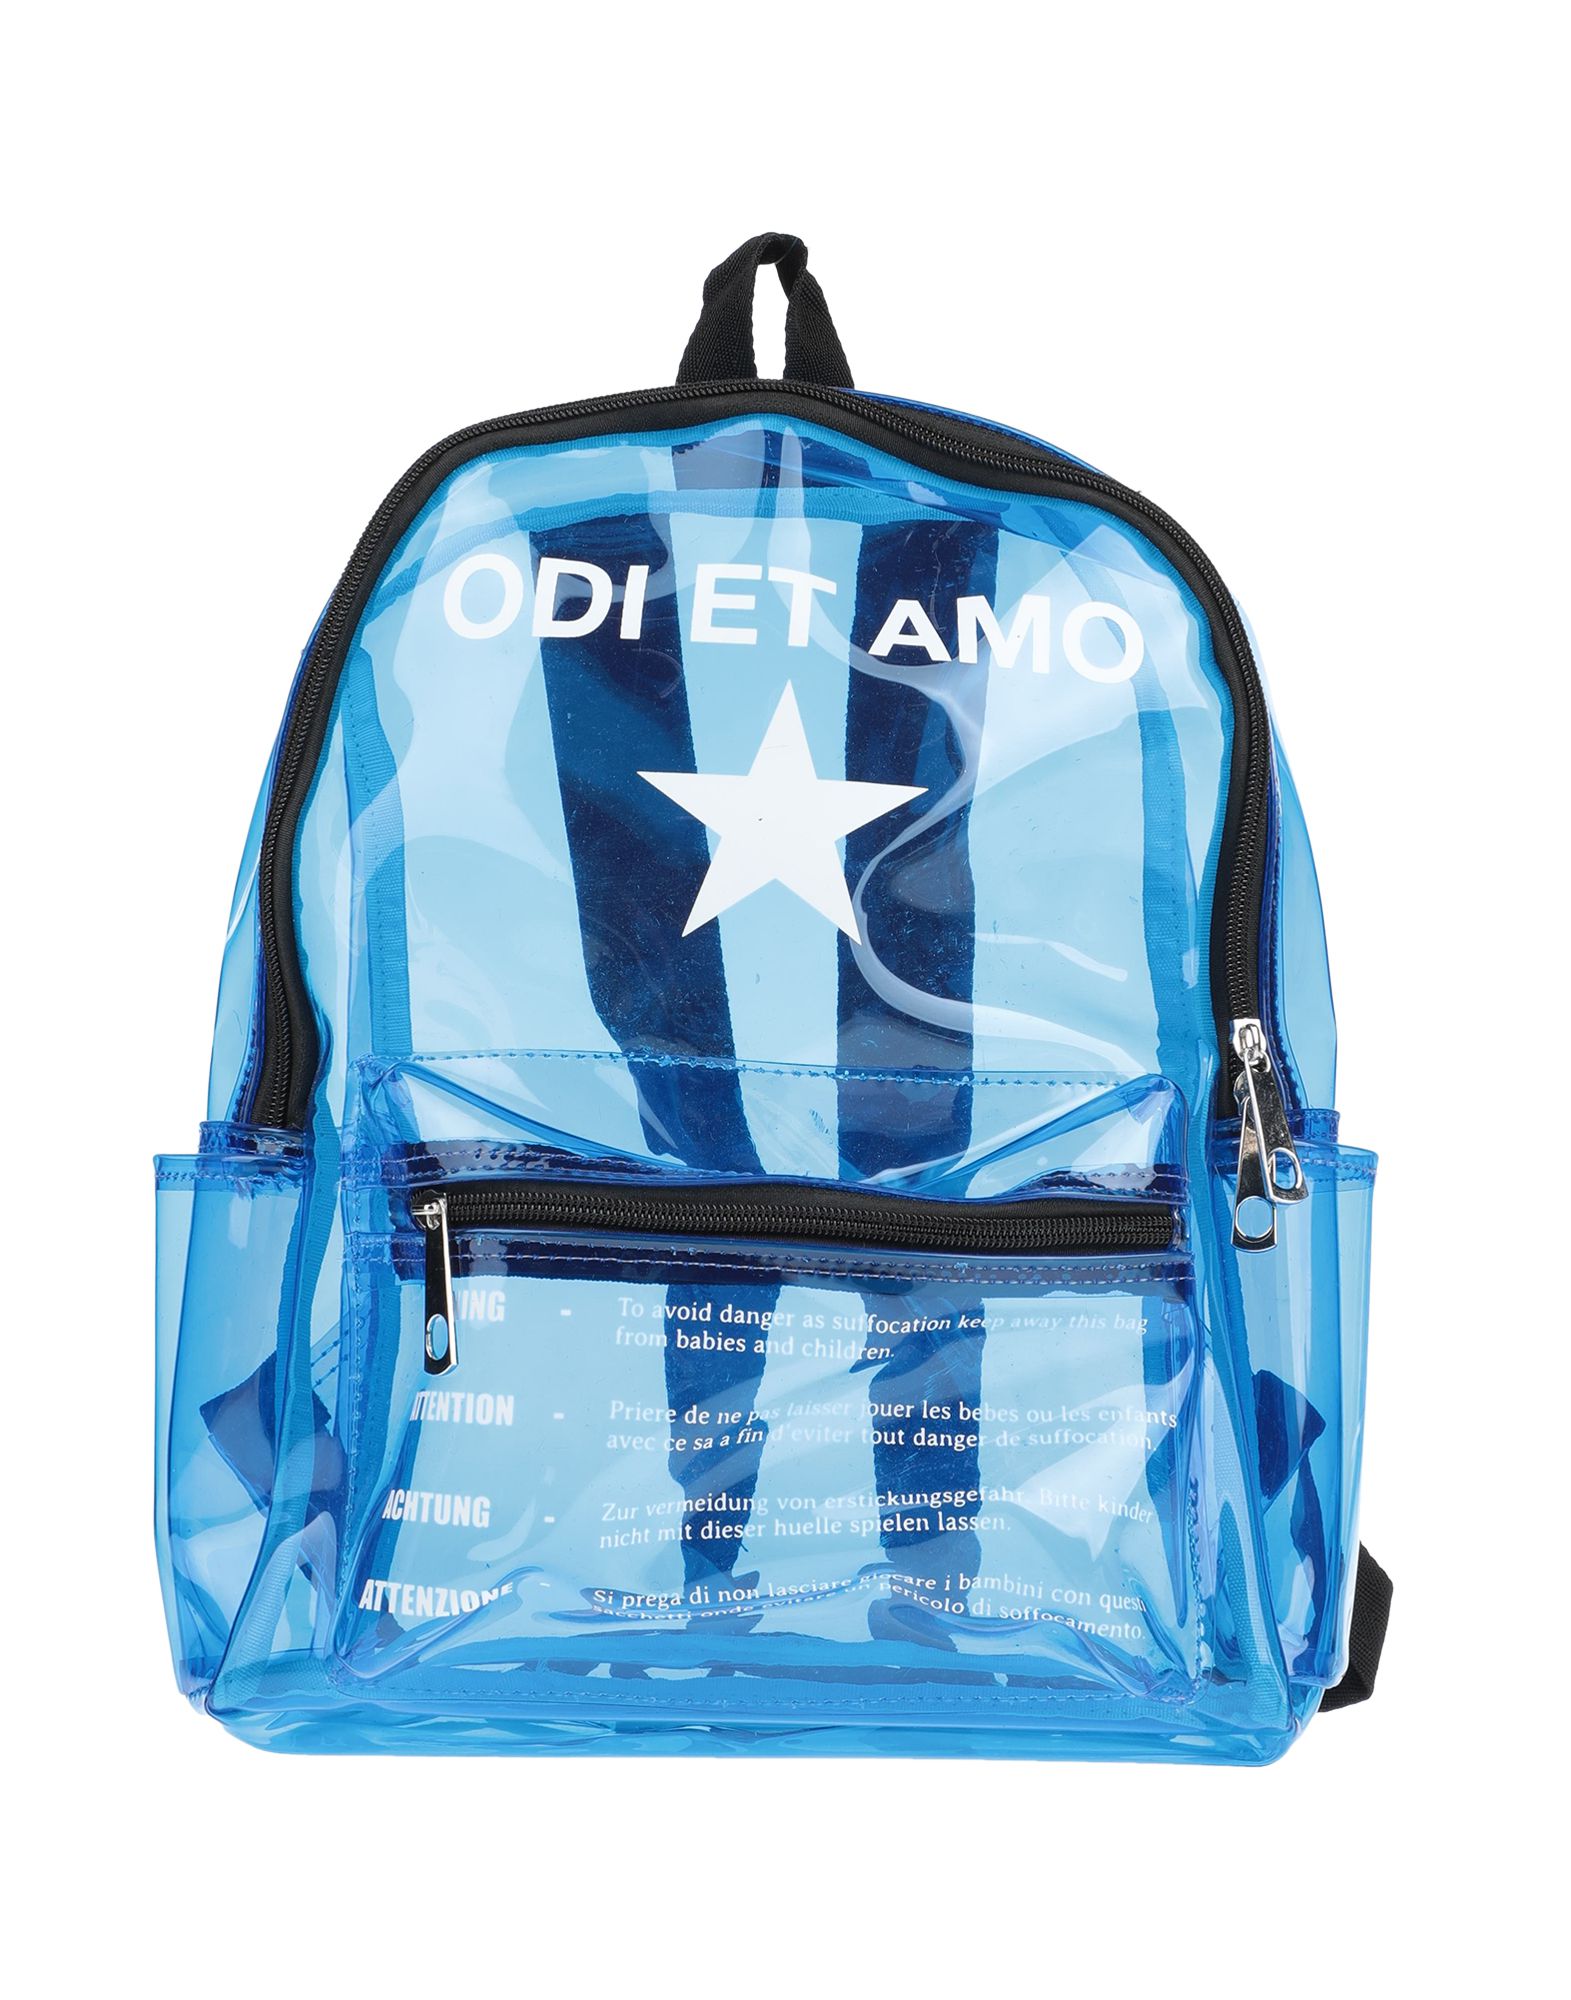 Odi Et Amo Backpacks In Blue